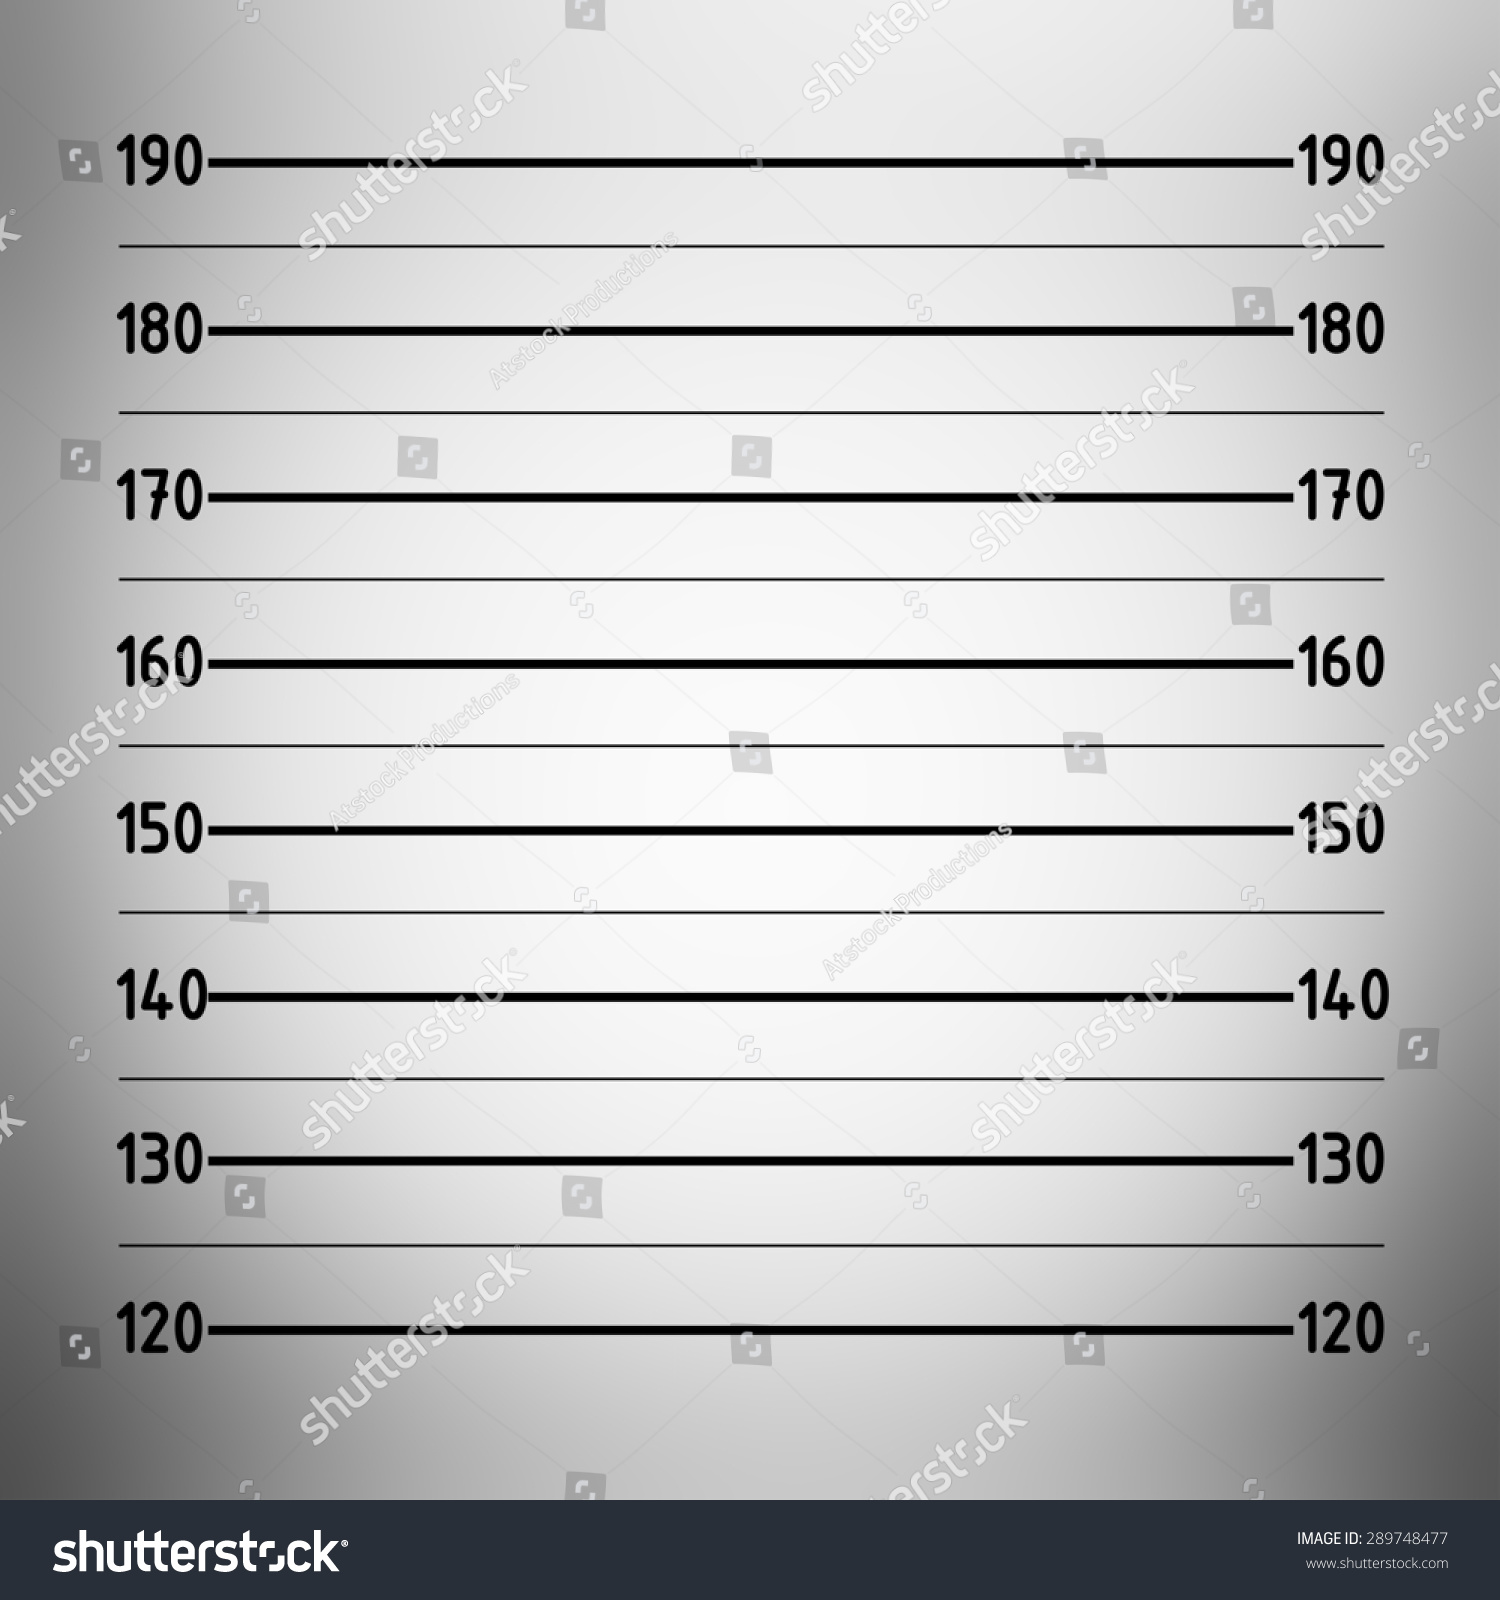 Police Lineup Mugshot Background Centimeter Unit Stock Illustration ...